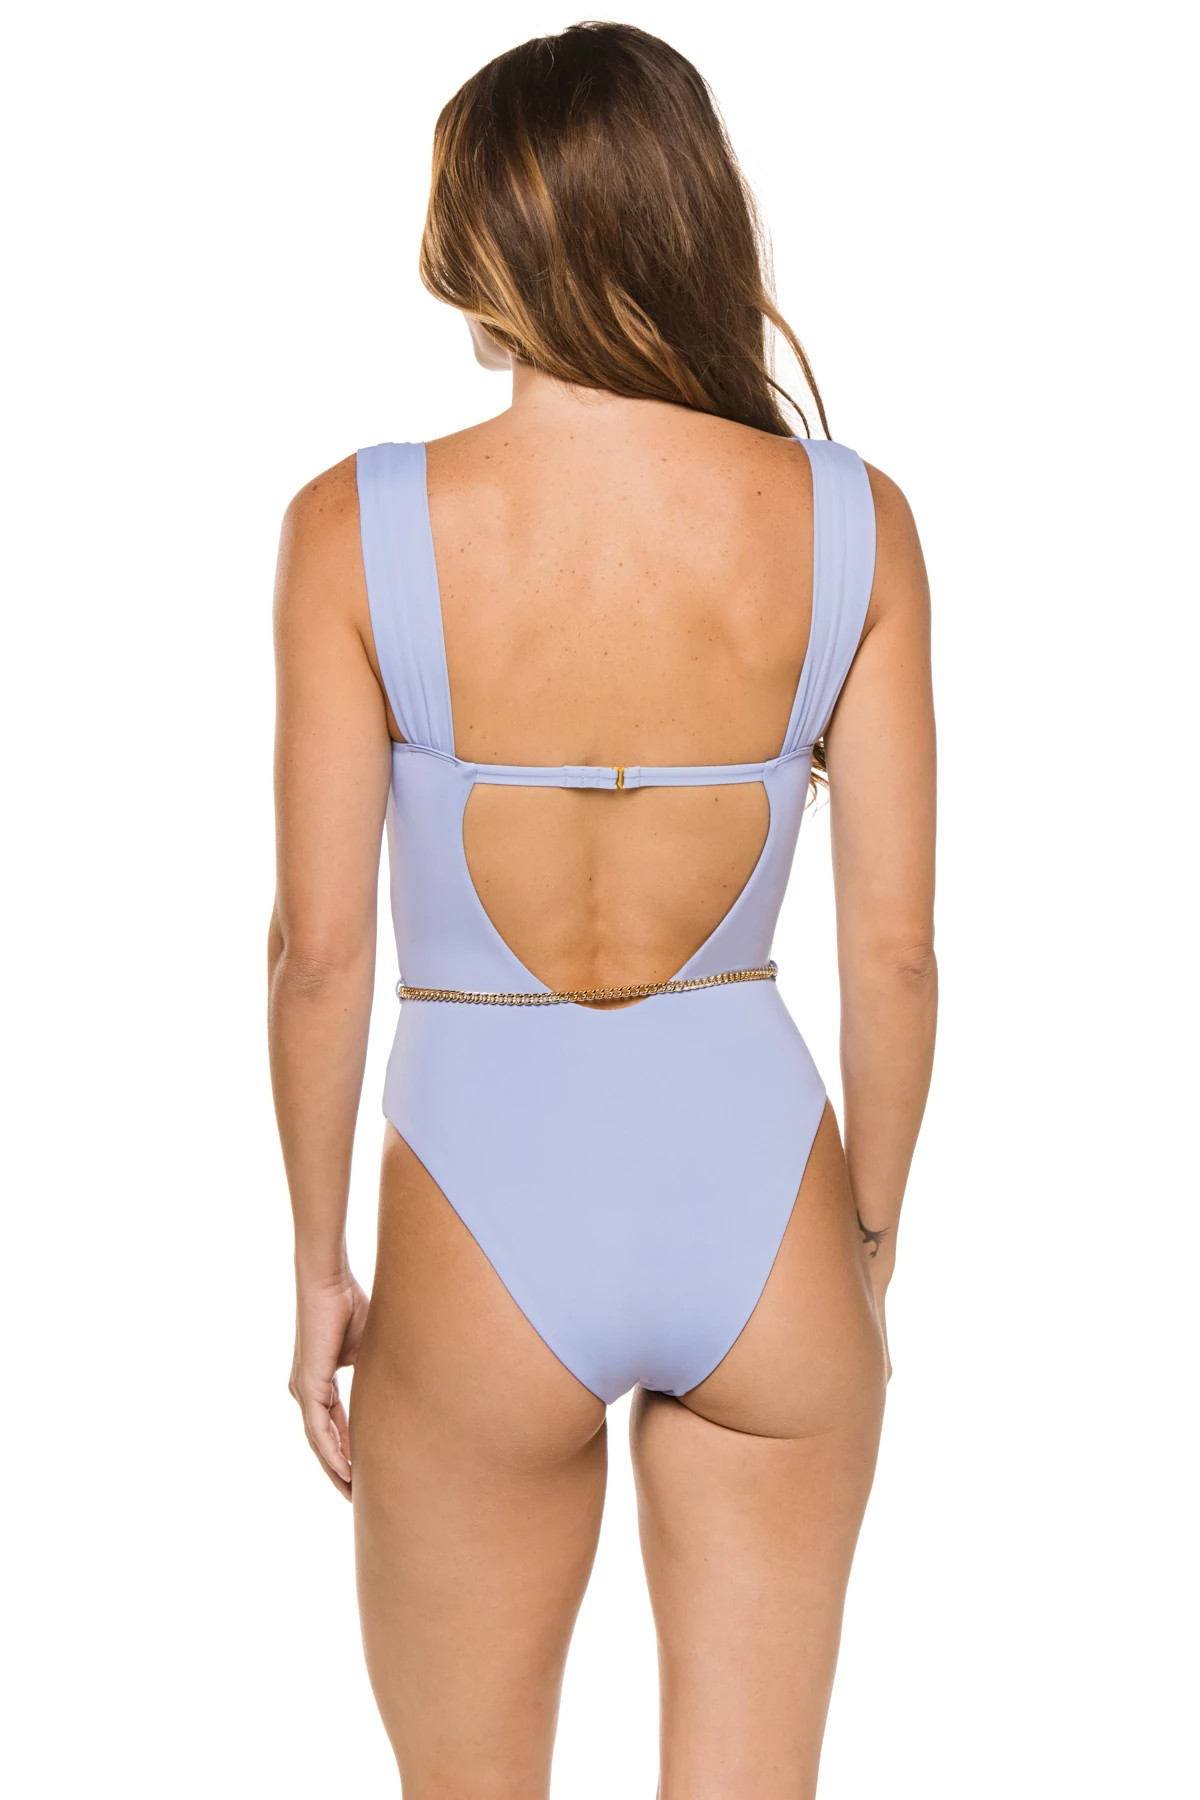 POWDER BLUE Vintage Danielle Over The Shoulder One Piece Swimsuit image number 2